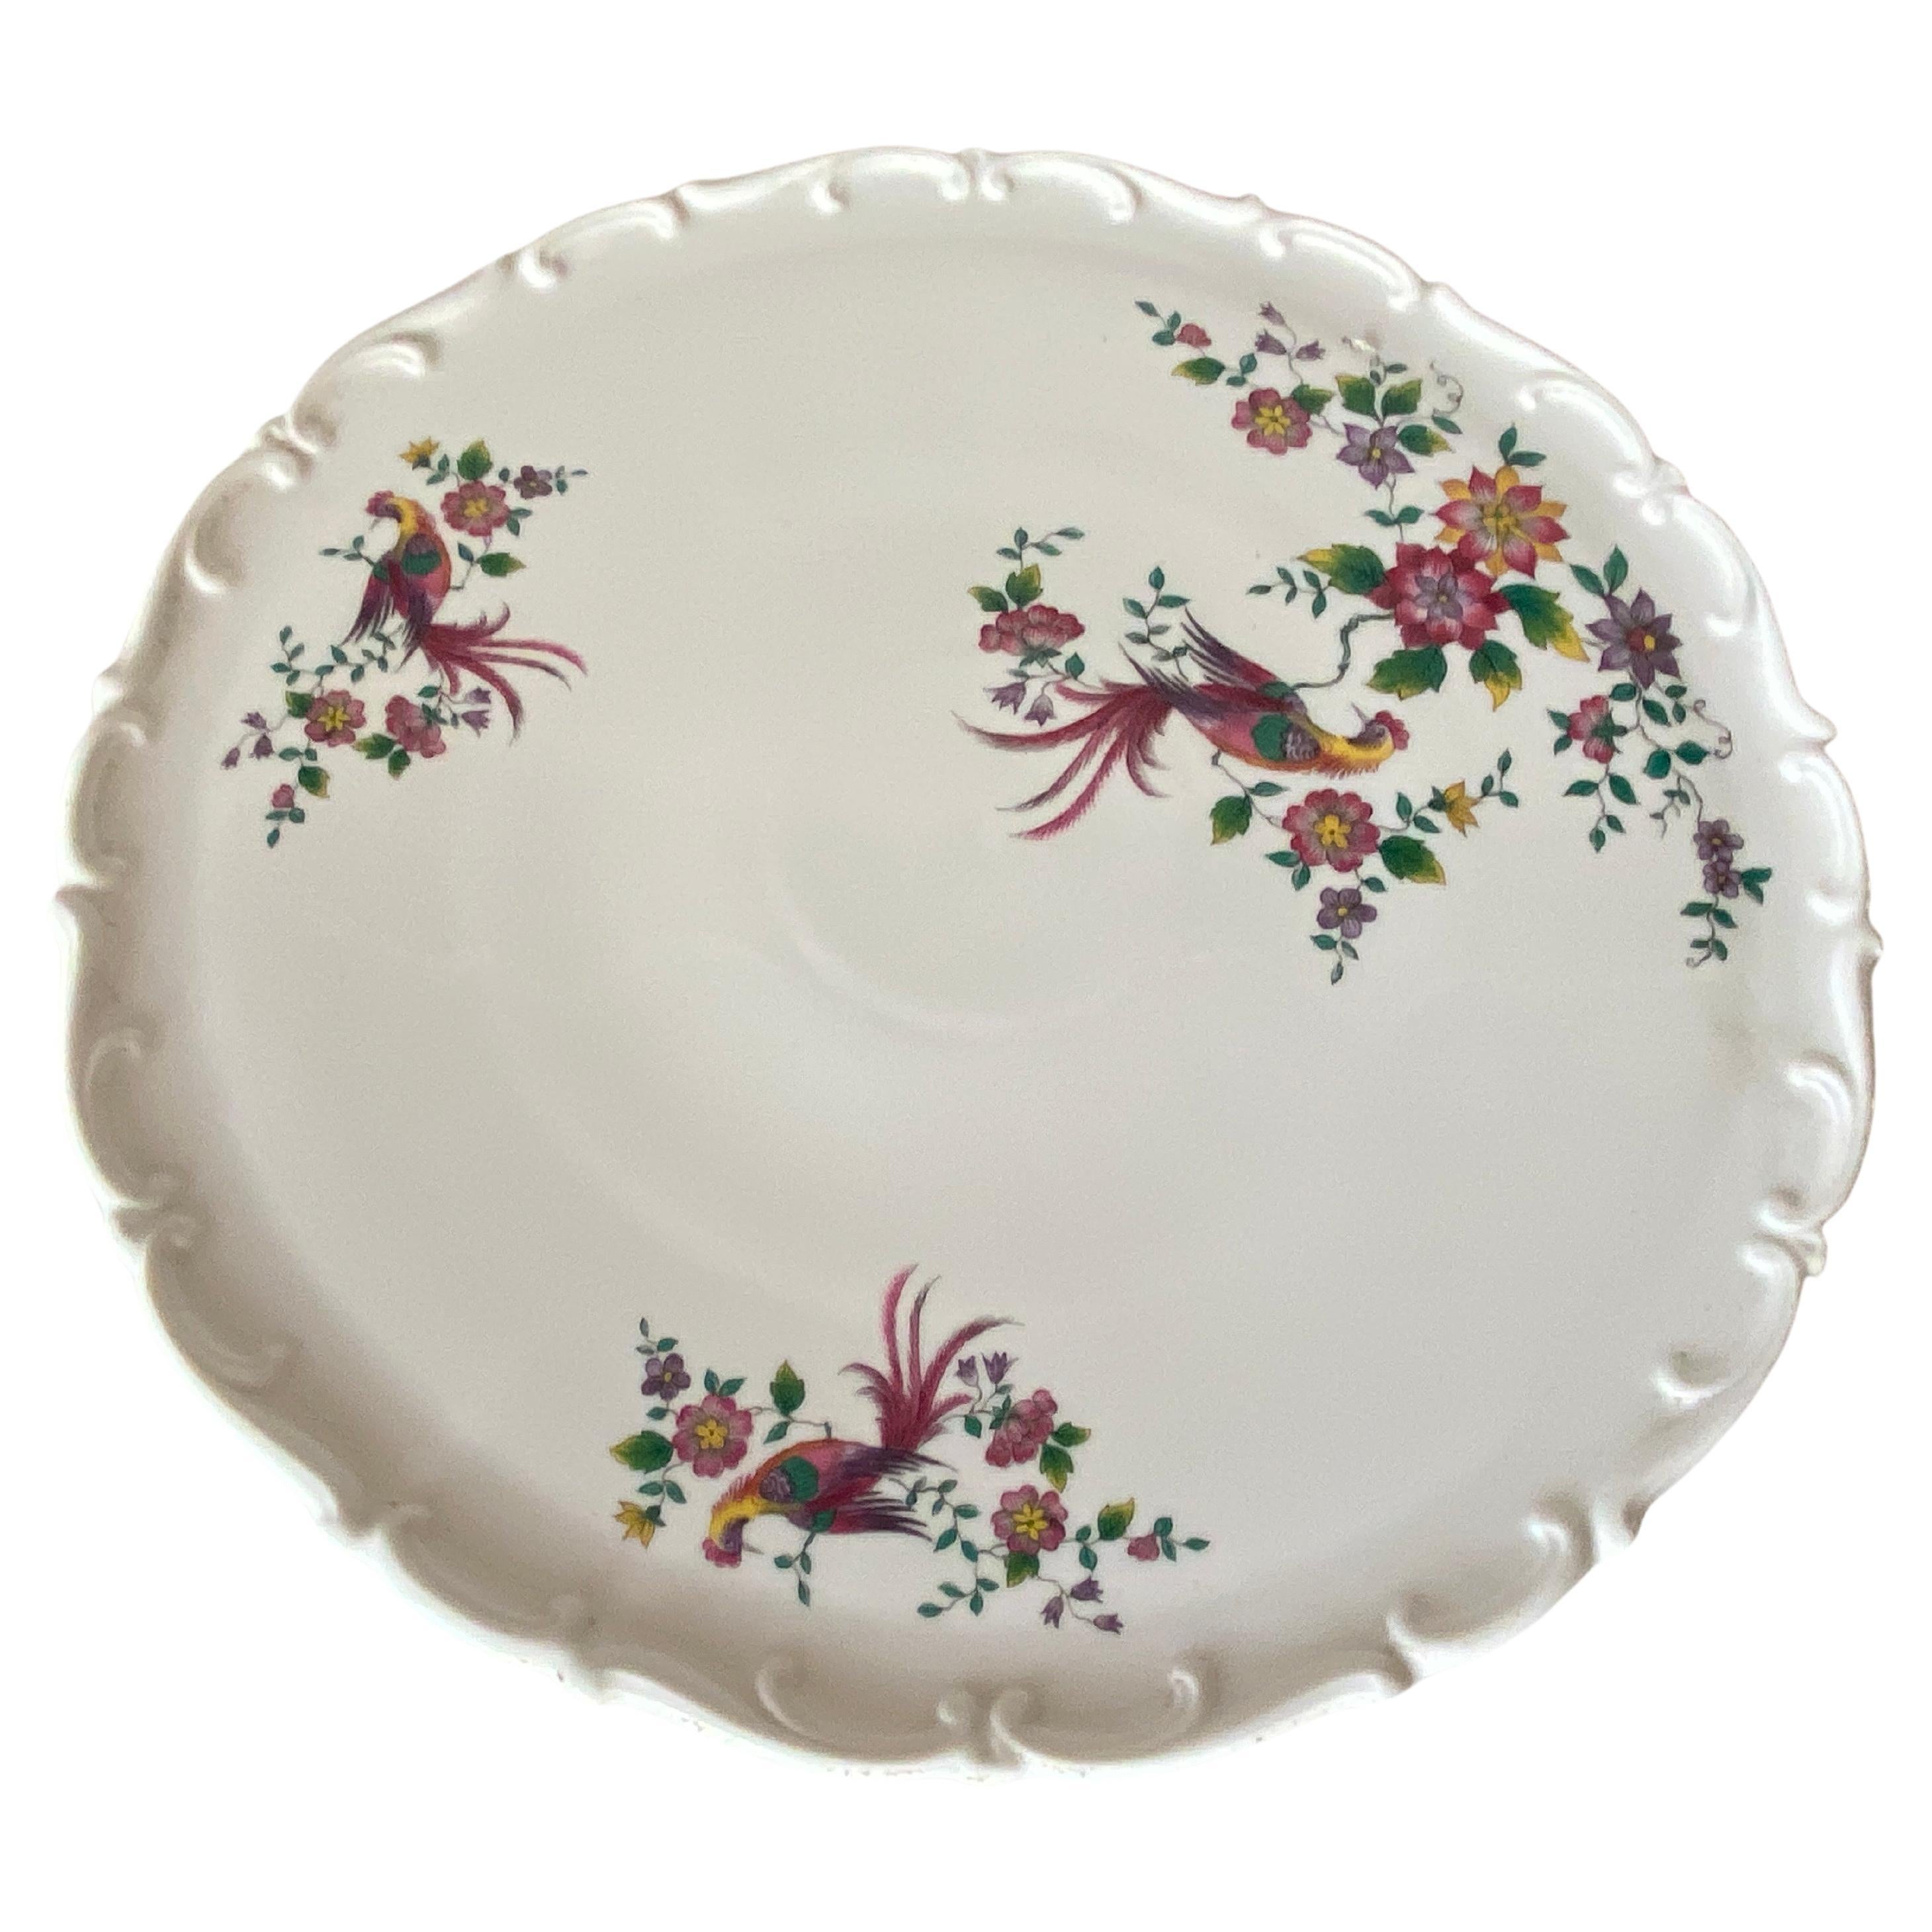 Porcelain Dish, by Royal Fettau with Birds and Flowers Decor, Bavaria Germany